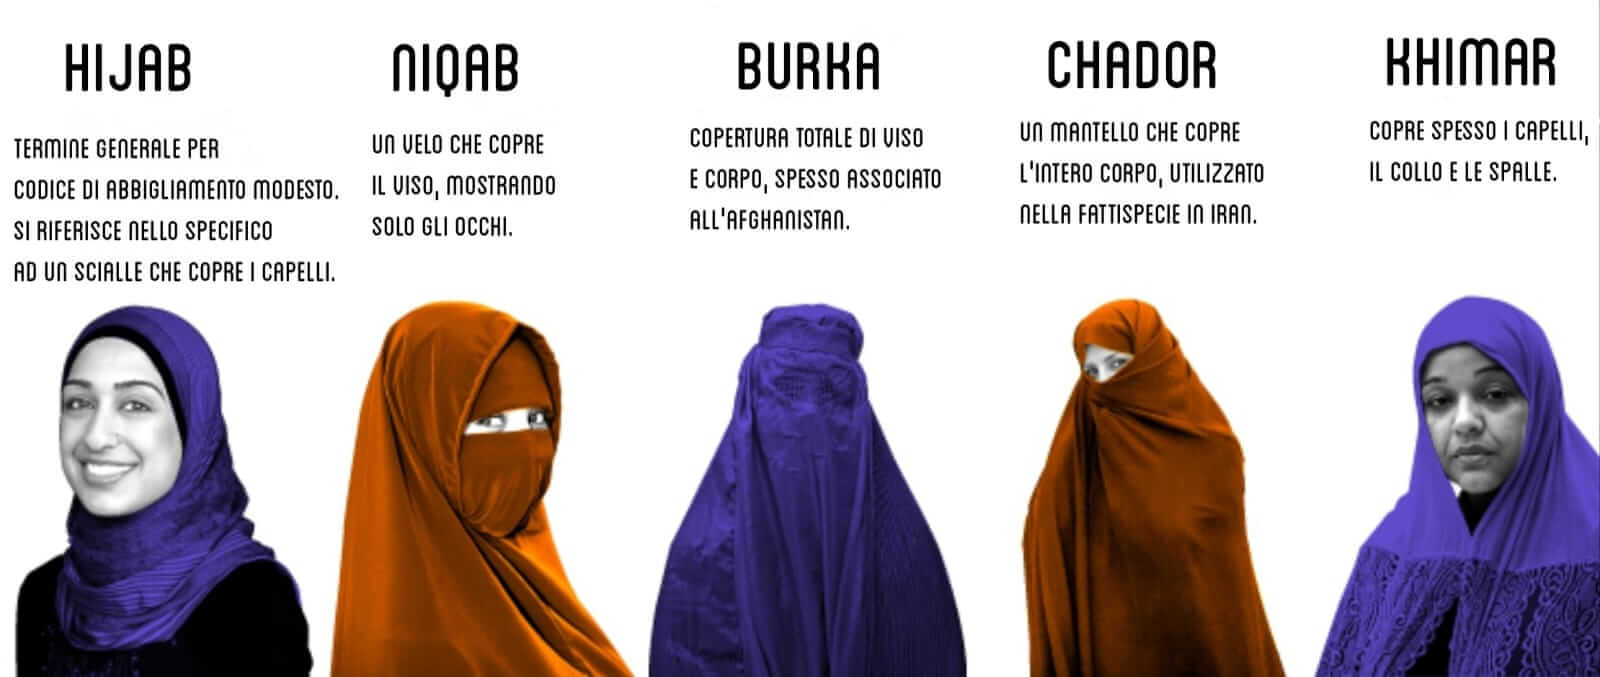 Differenze hijab niqab burka, perché le donne musulmane indossano il hijab, perché le donne musulmane portano il velo, perché le donne musulmane portano il hijab, cos'è il hijab, cos'è il velo islamico